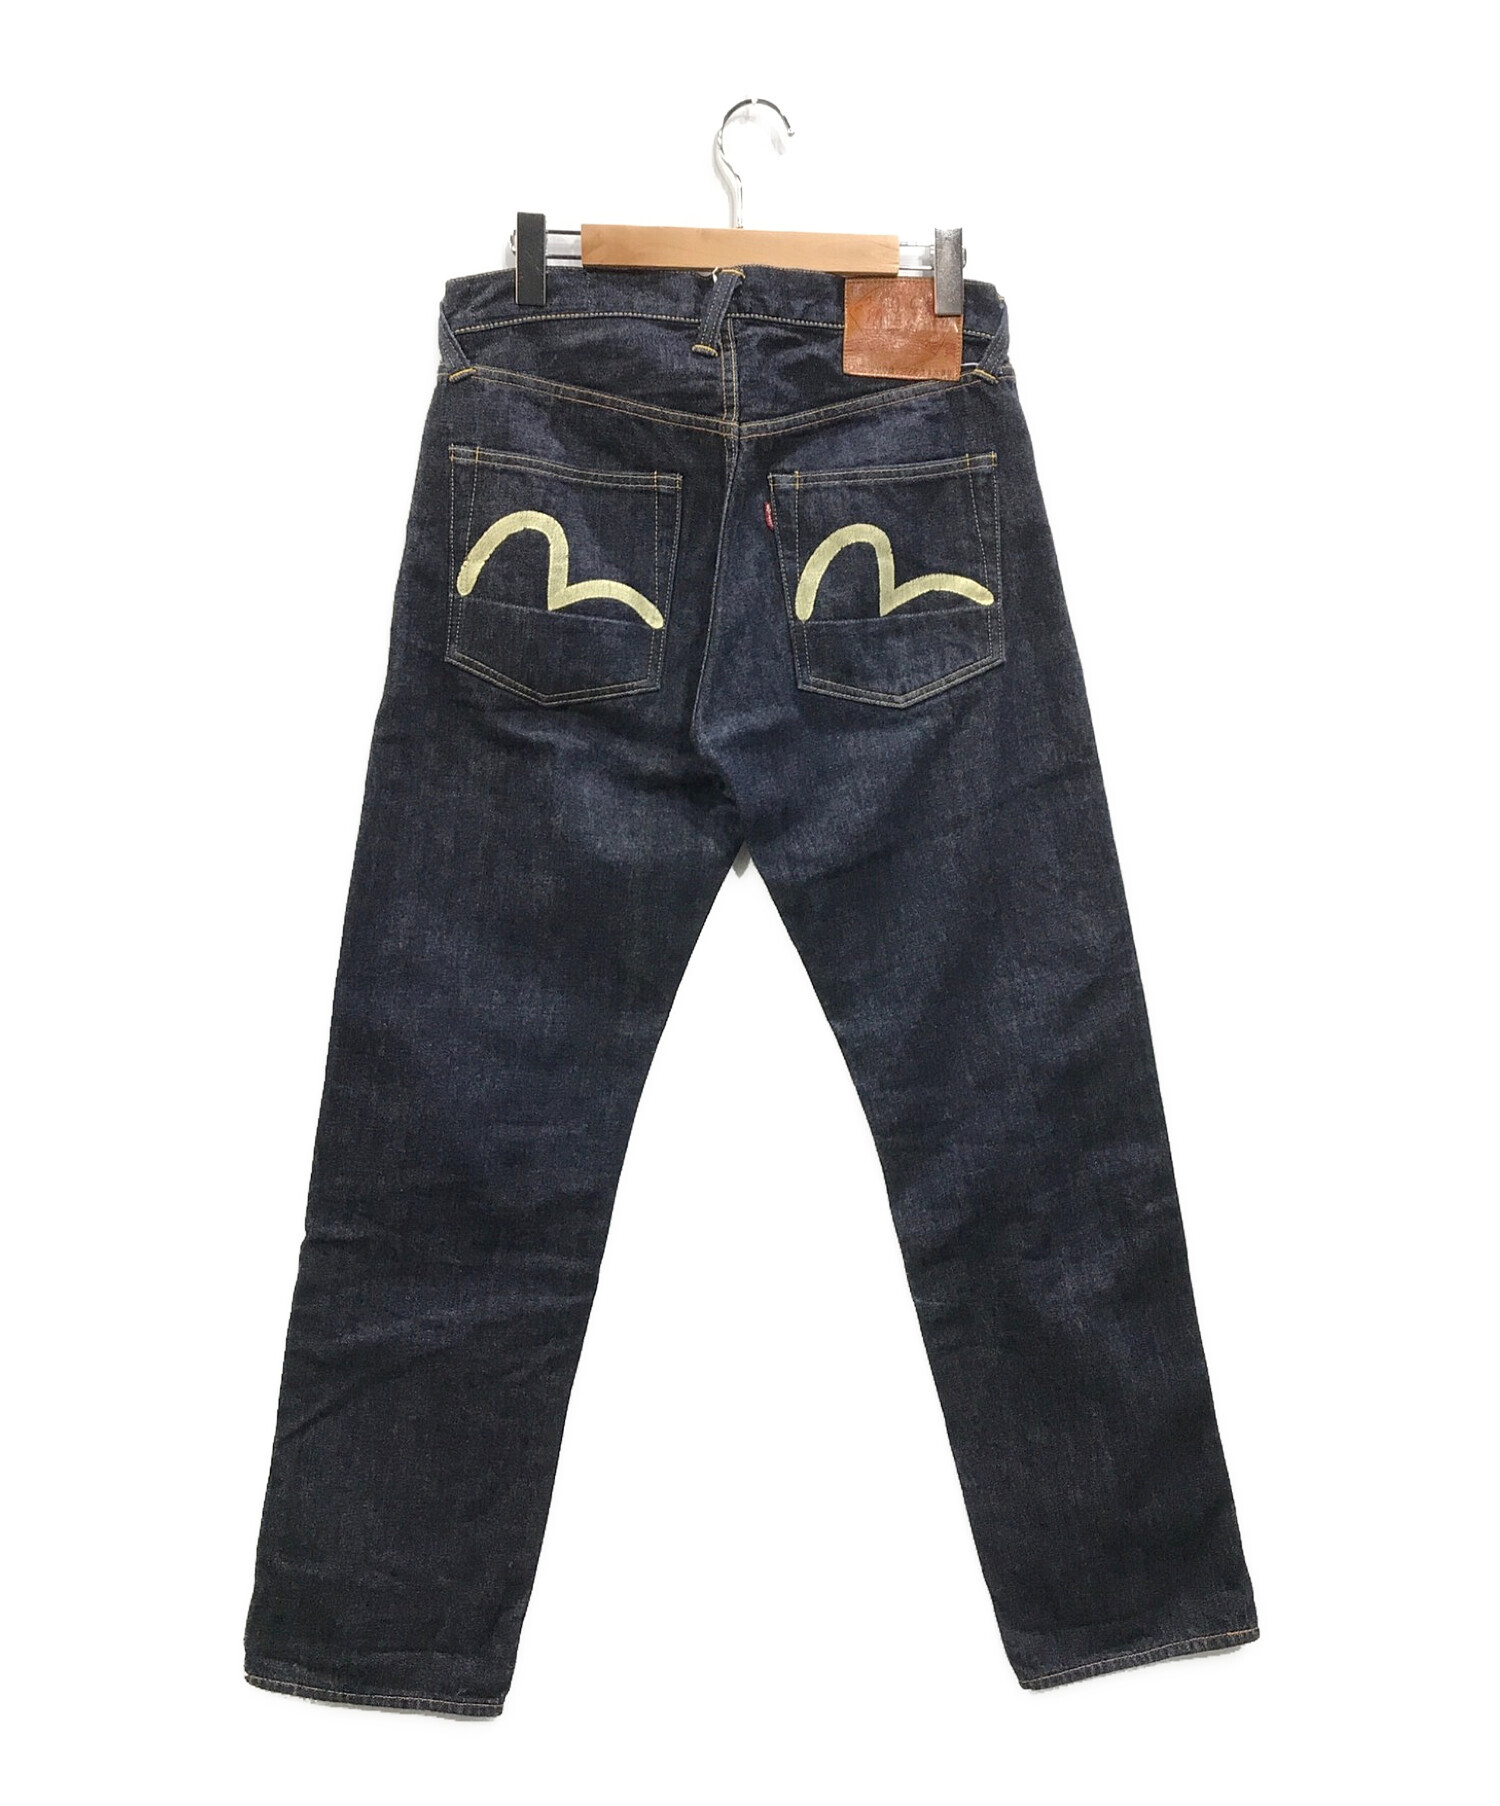 Evisu Jeans エヴィスジーンズ Lot. No.2 DENIM REGULAR STRAIGHT デニムパンツ インディゴ  サイズ:W